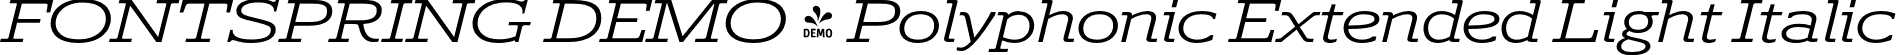 FONTSPRING DEMO - Polyphonic Extended Light Italic font | Fontspring-DEMO-polyphonic-extendedlightitalic.otf